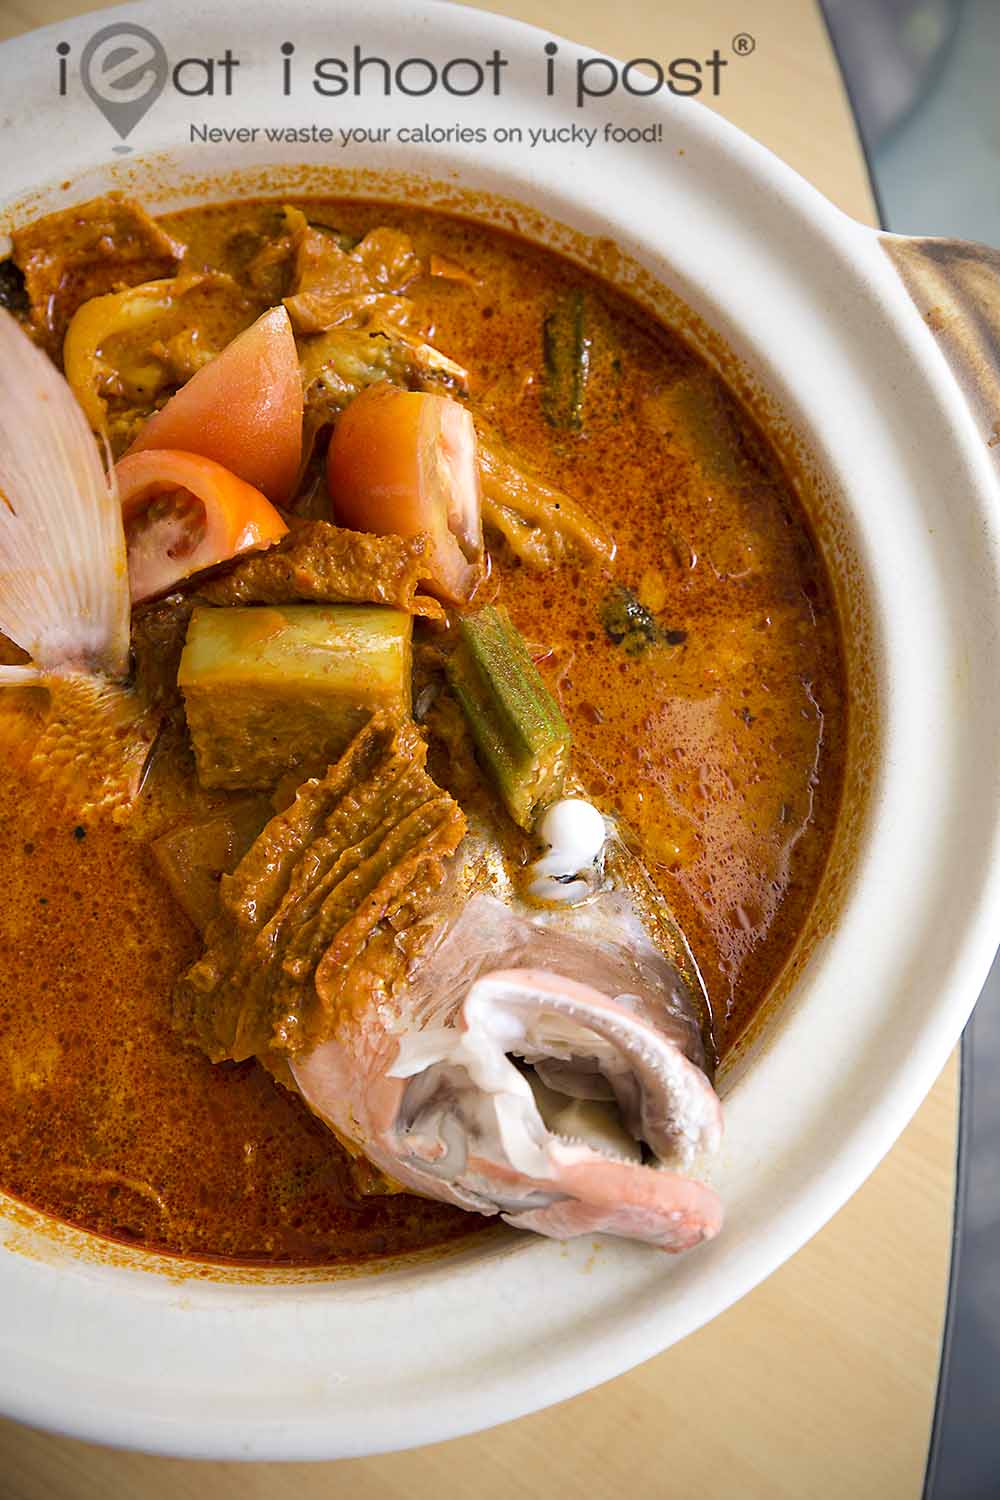 Curry Fishhead